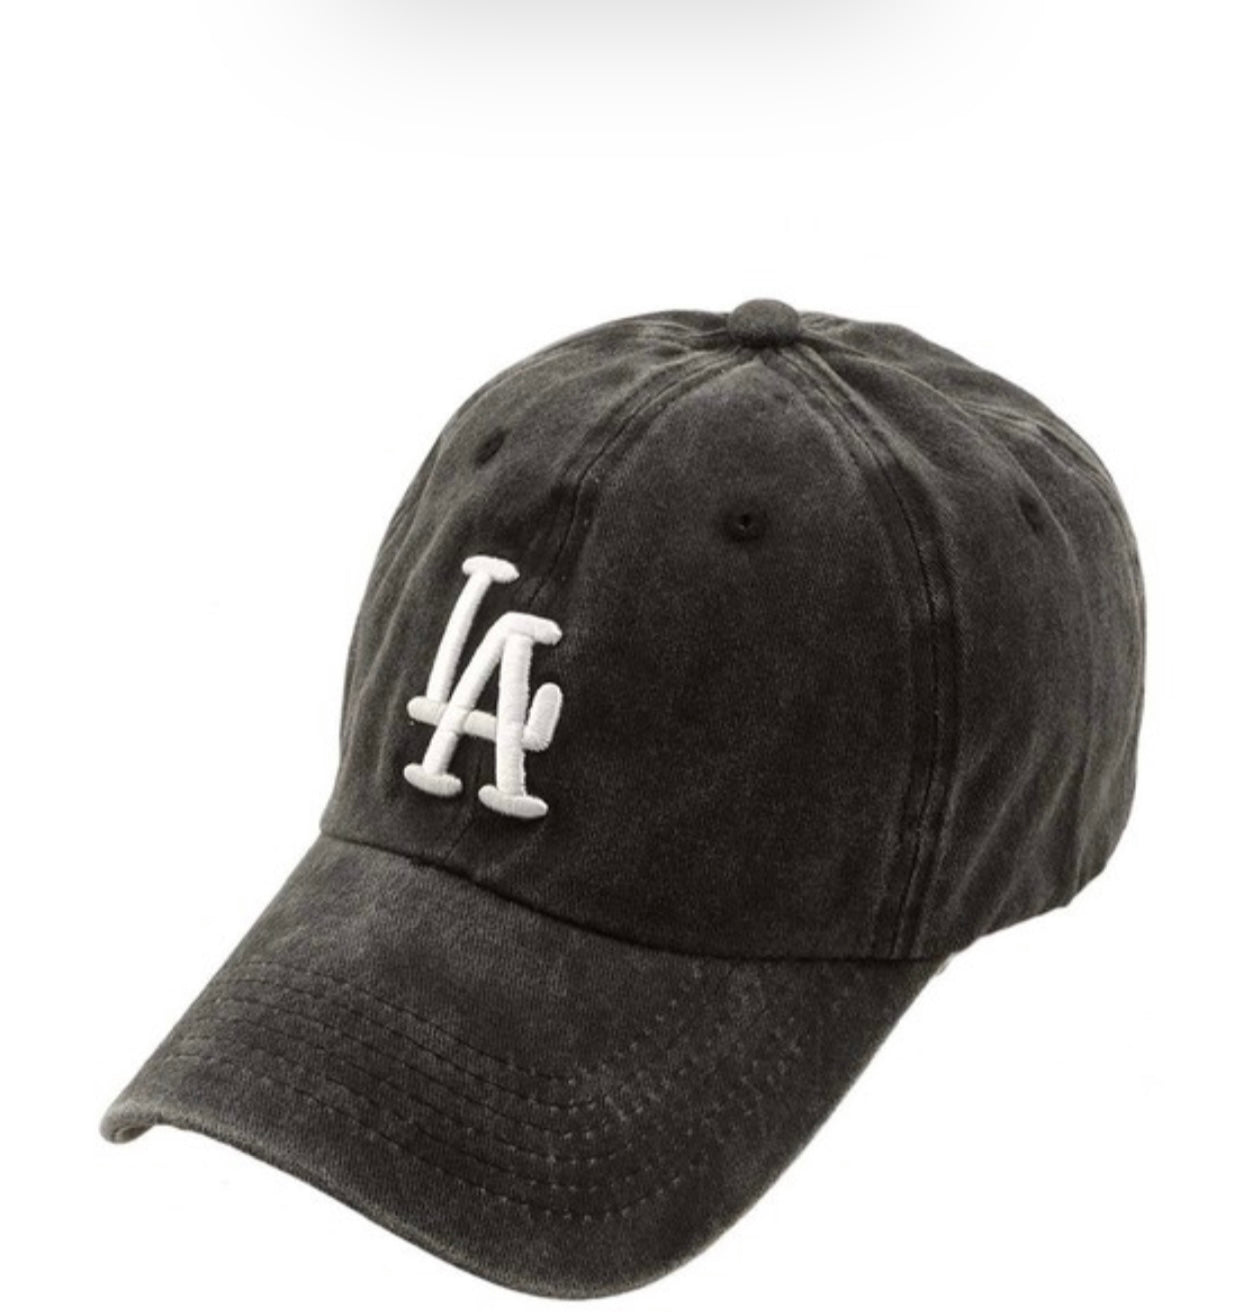 "LA" Baseball Cap